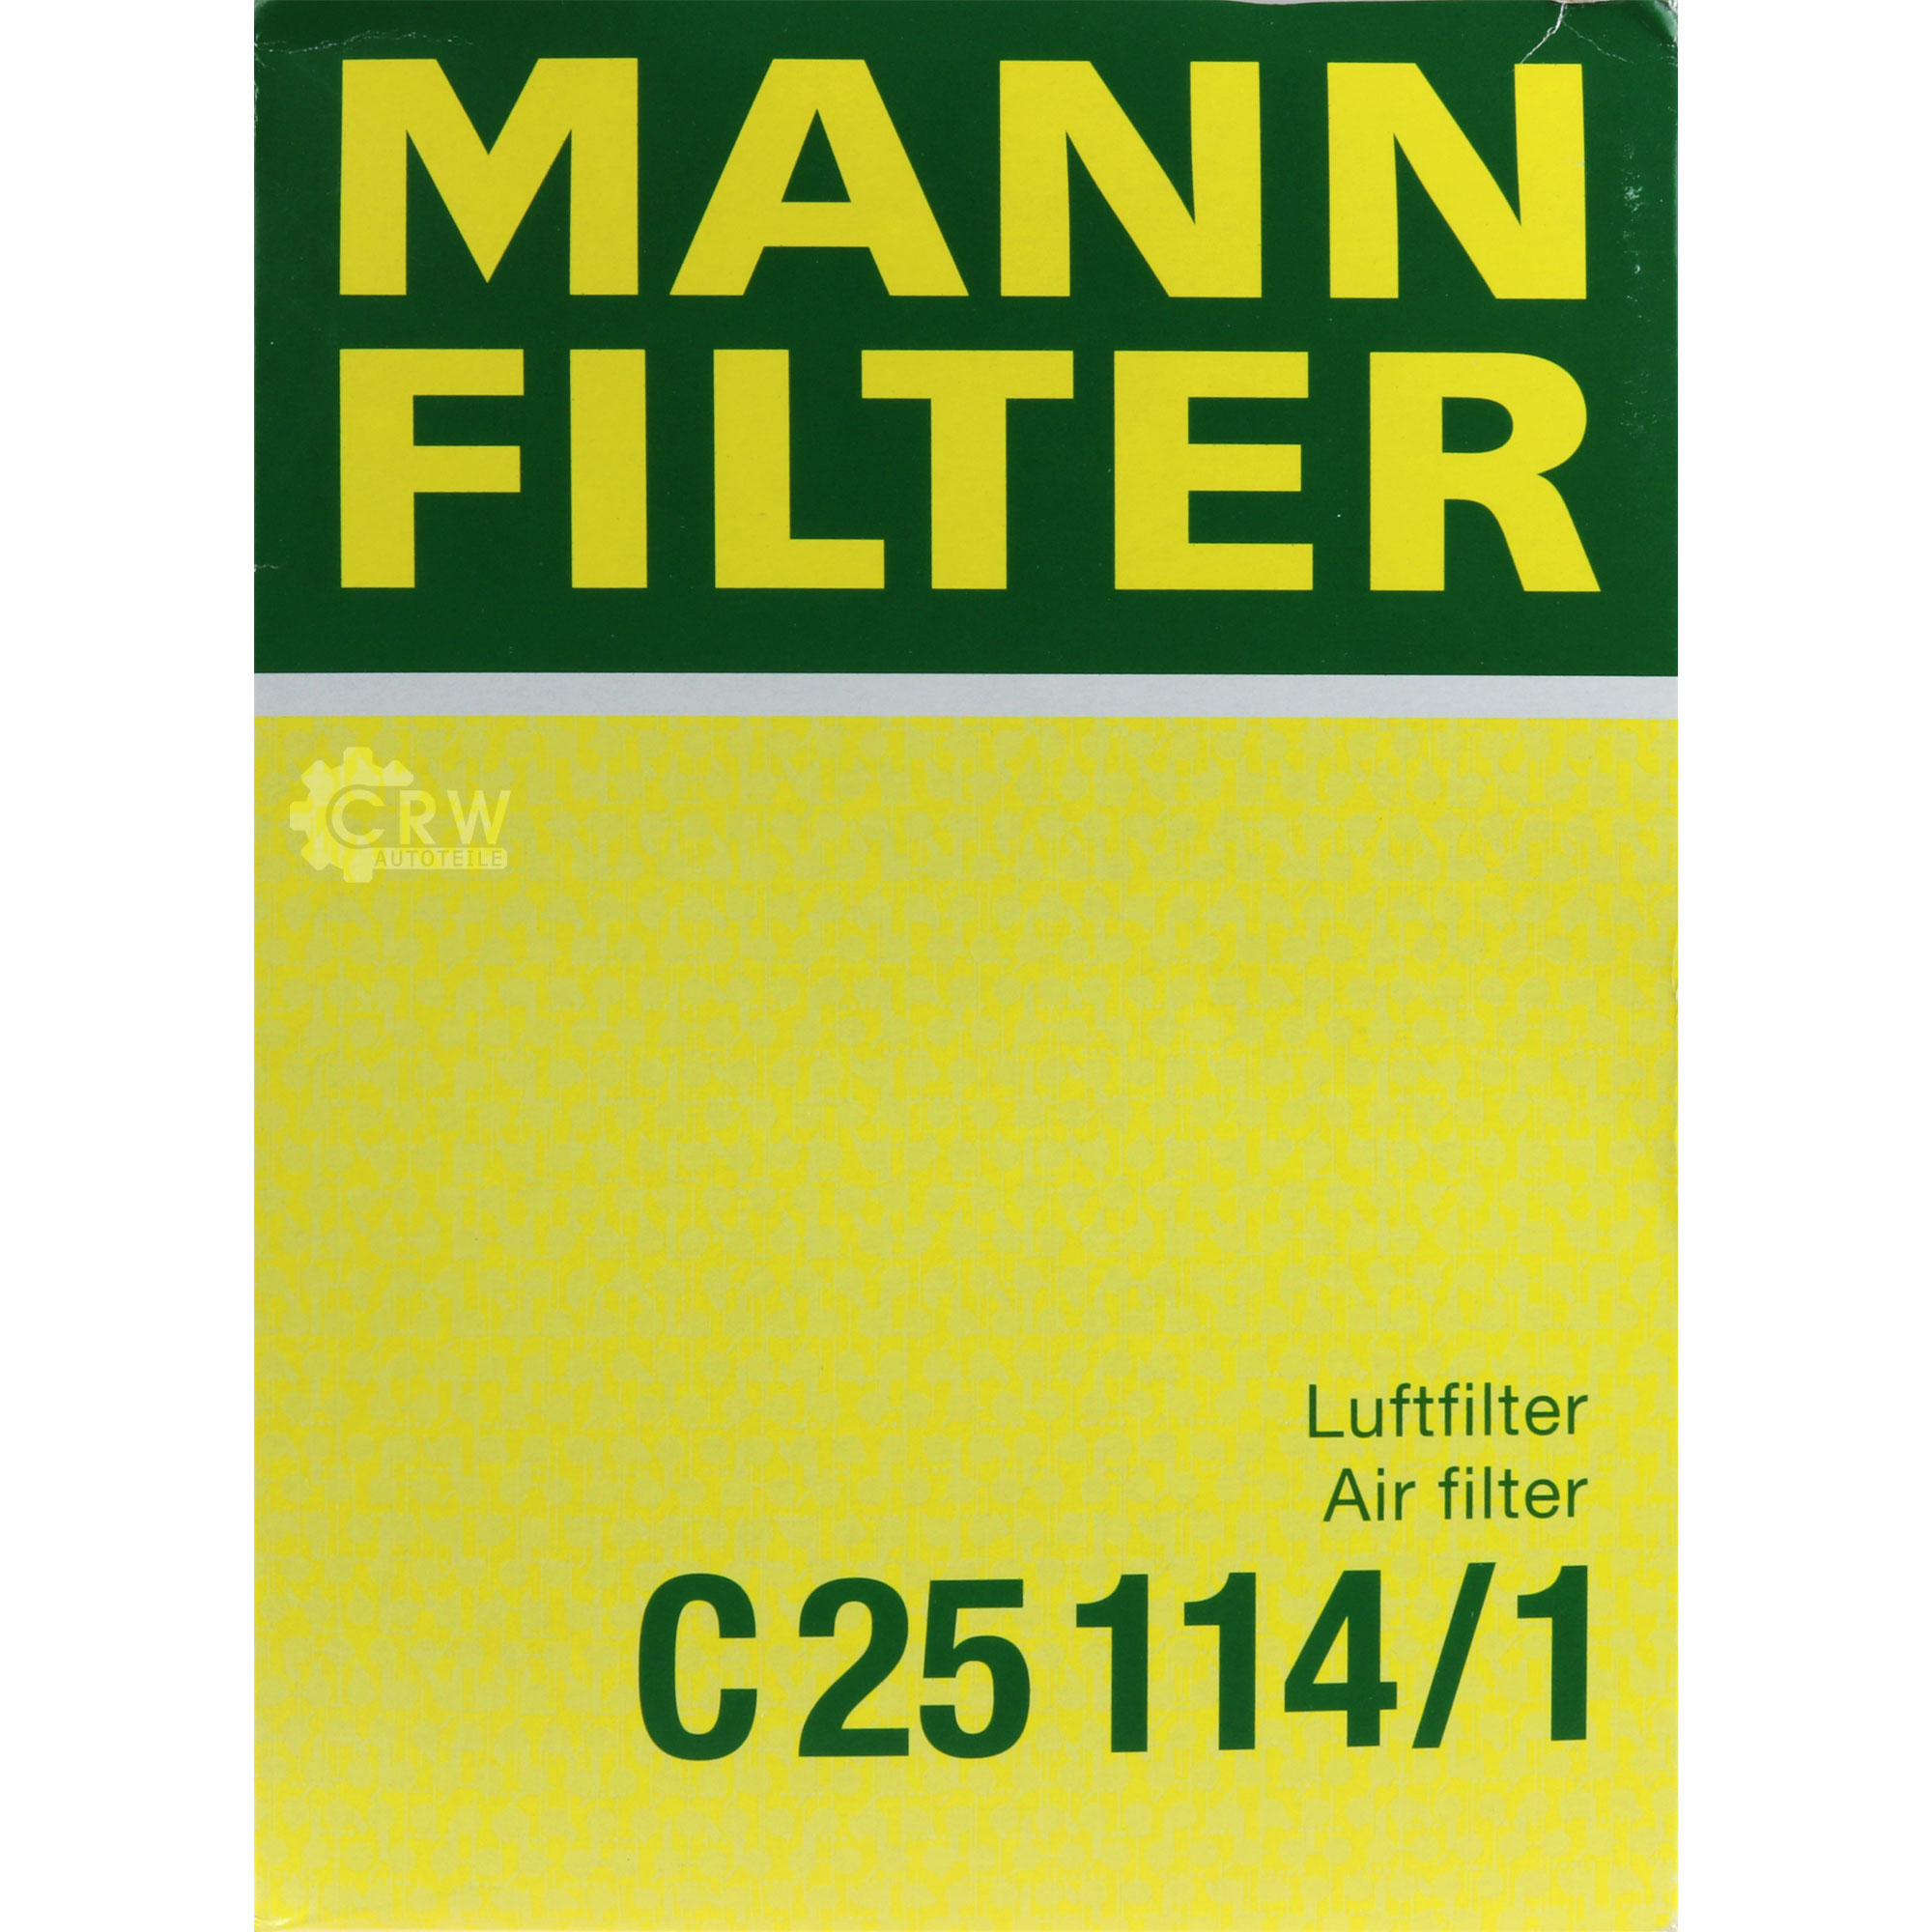 MANN-FILTER Luftfilter für BMW 3er E46 318i 316i E36 320i 323i 2.5 5er E39 523i